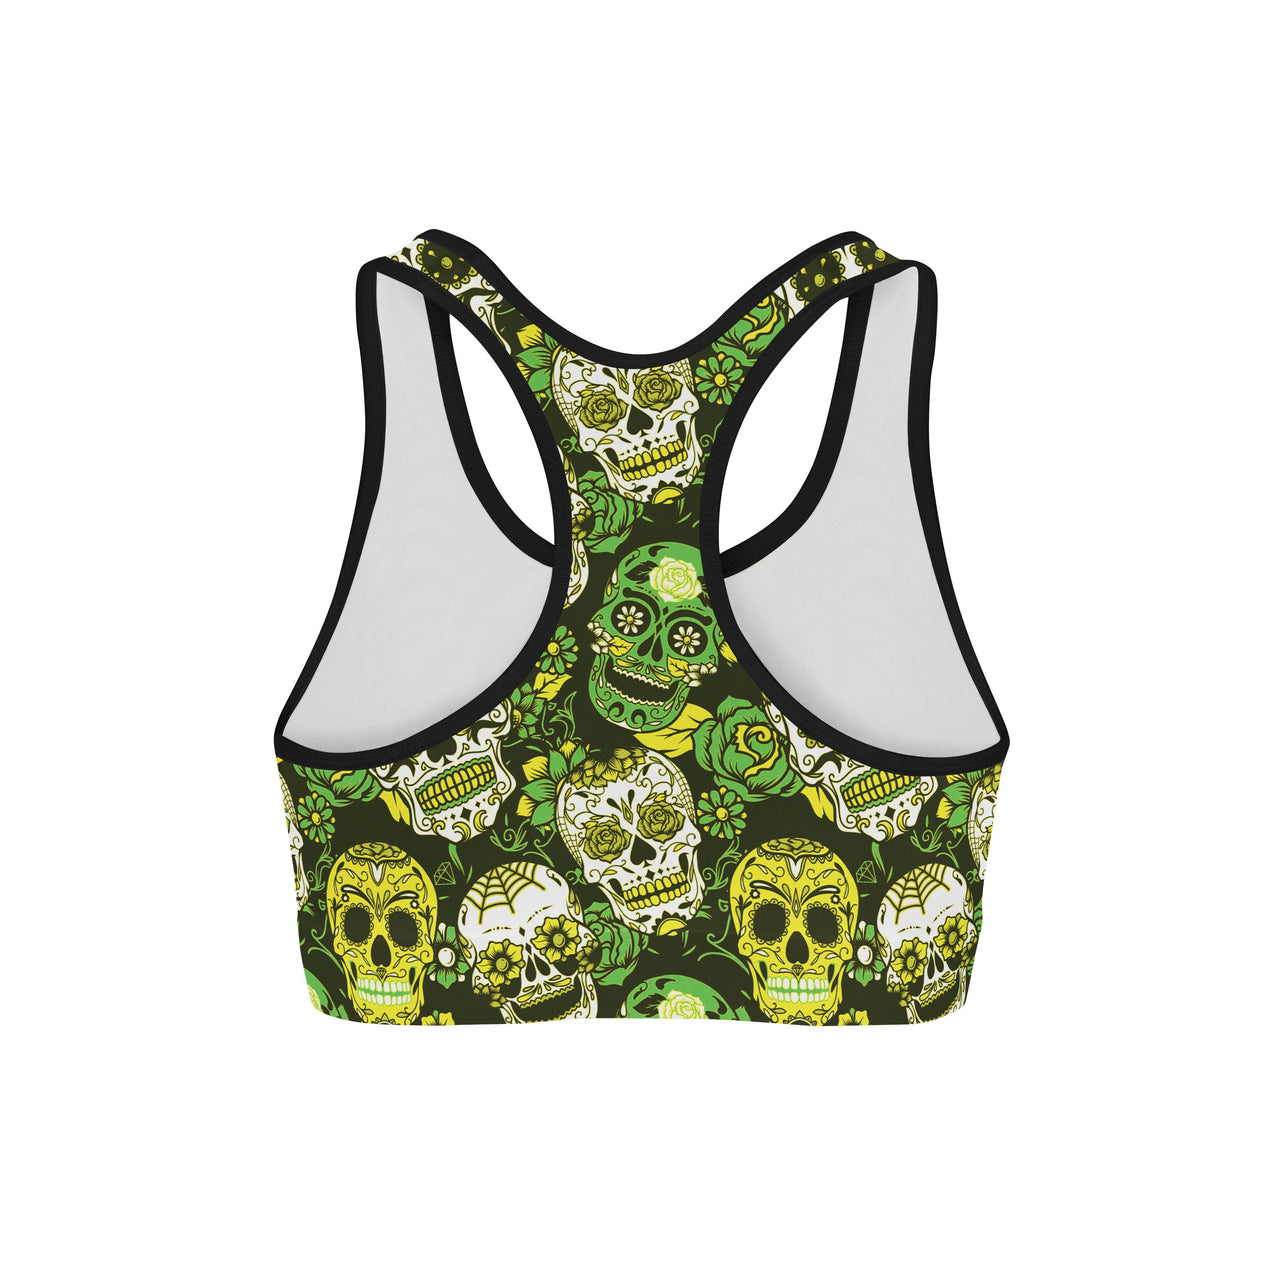 green sports bra with sugar skulls